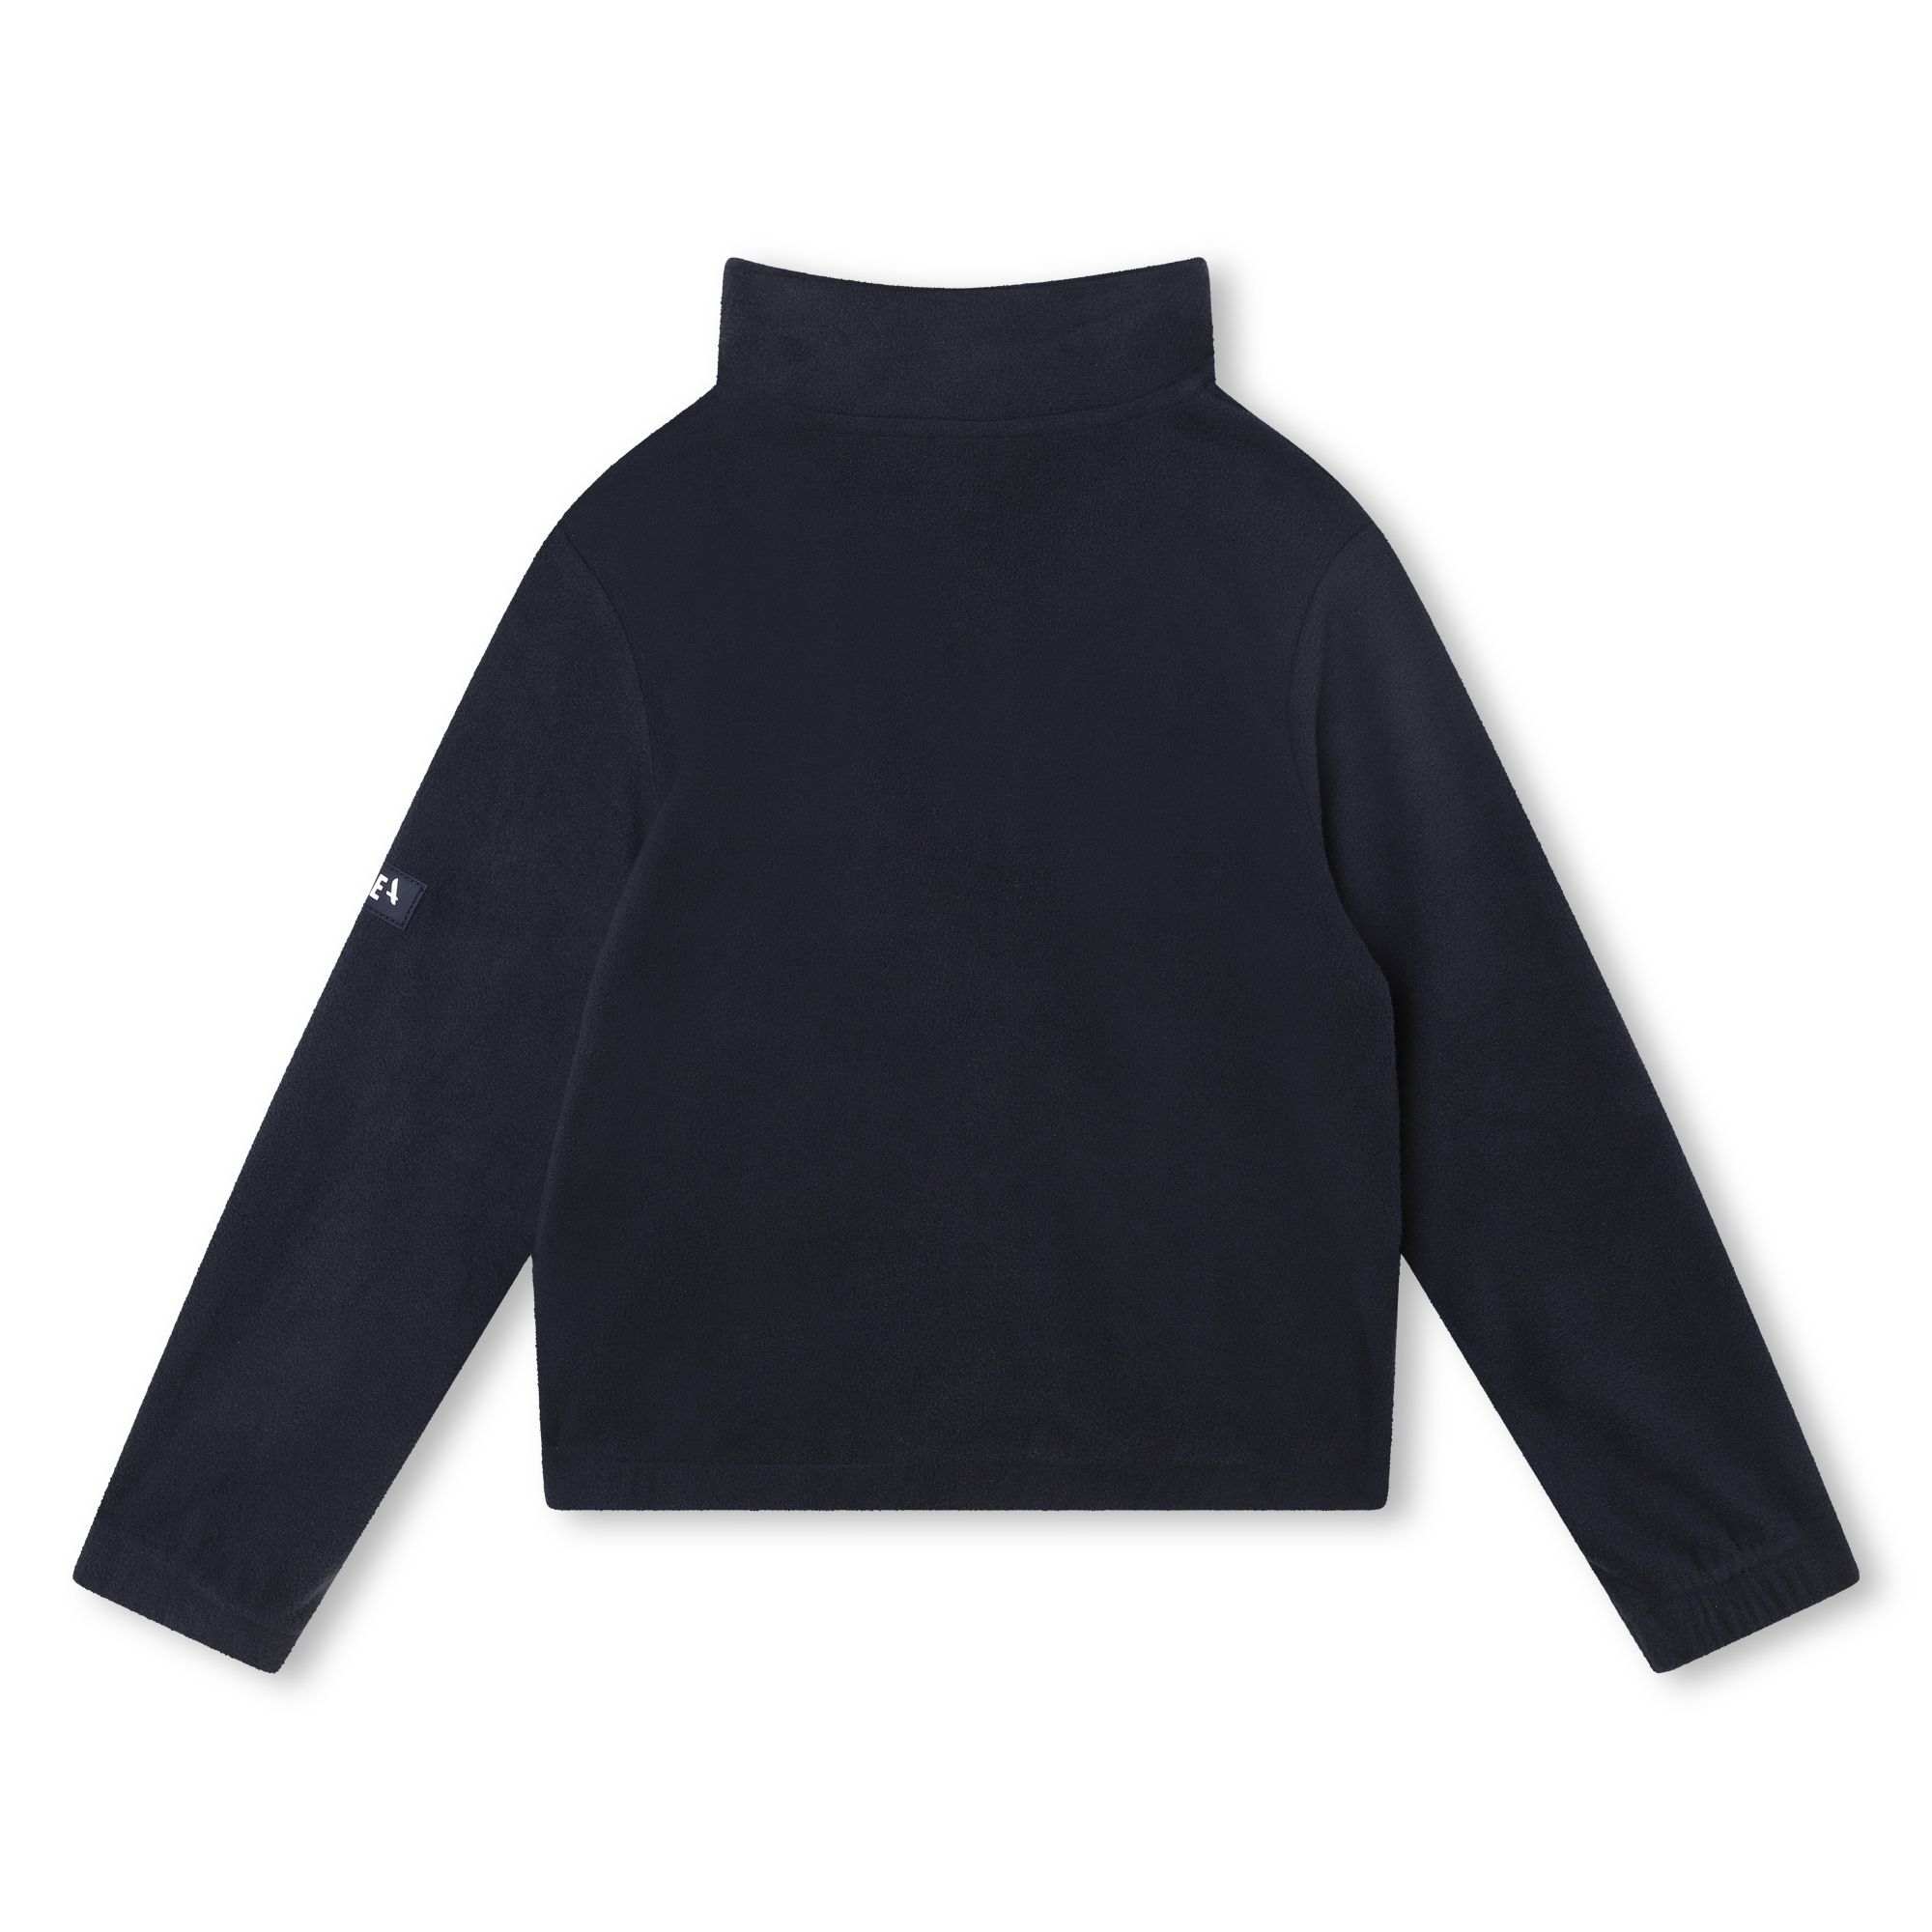 High-collar sweatshirt AIGLE for UNISEX